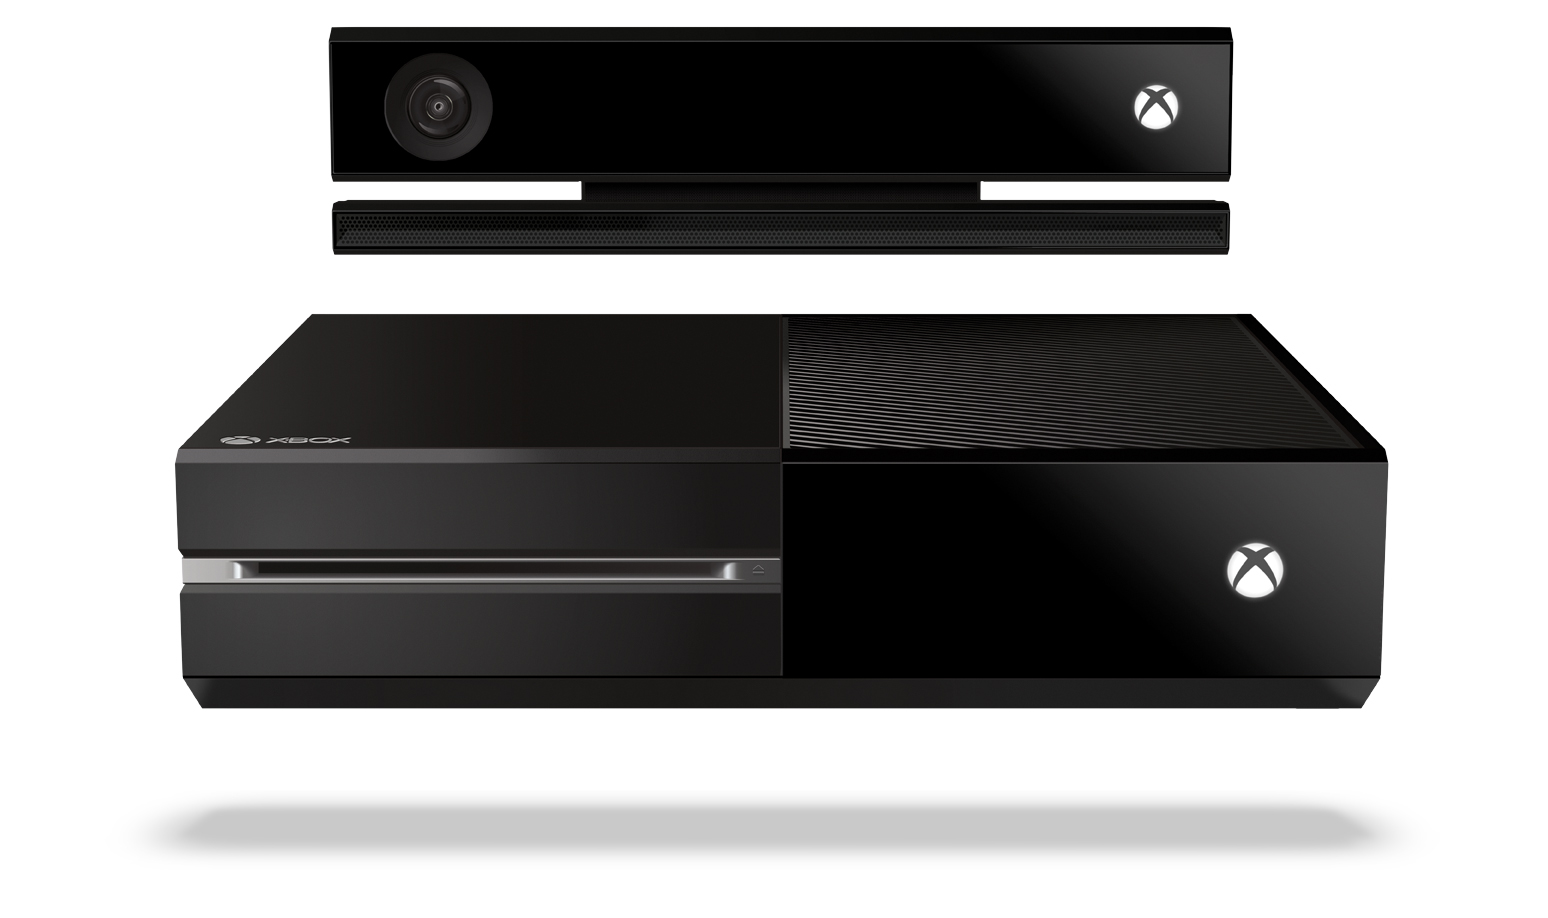 Microsoft anuncia oficialmente la llegada de la Xbox One con 1 TB de ...